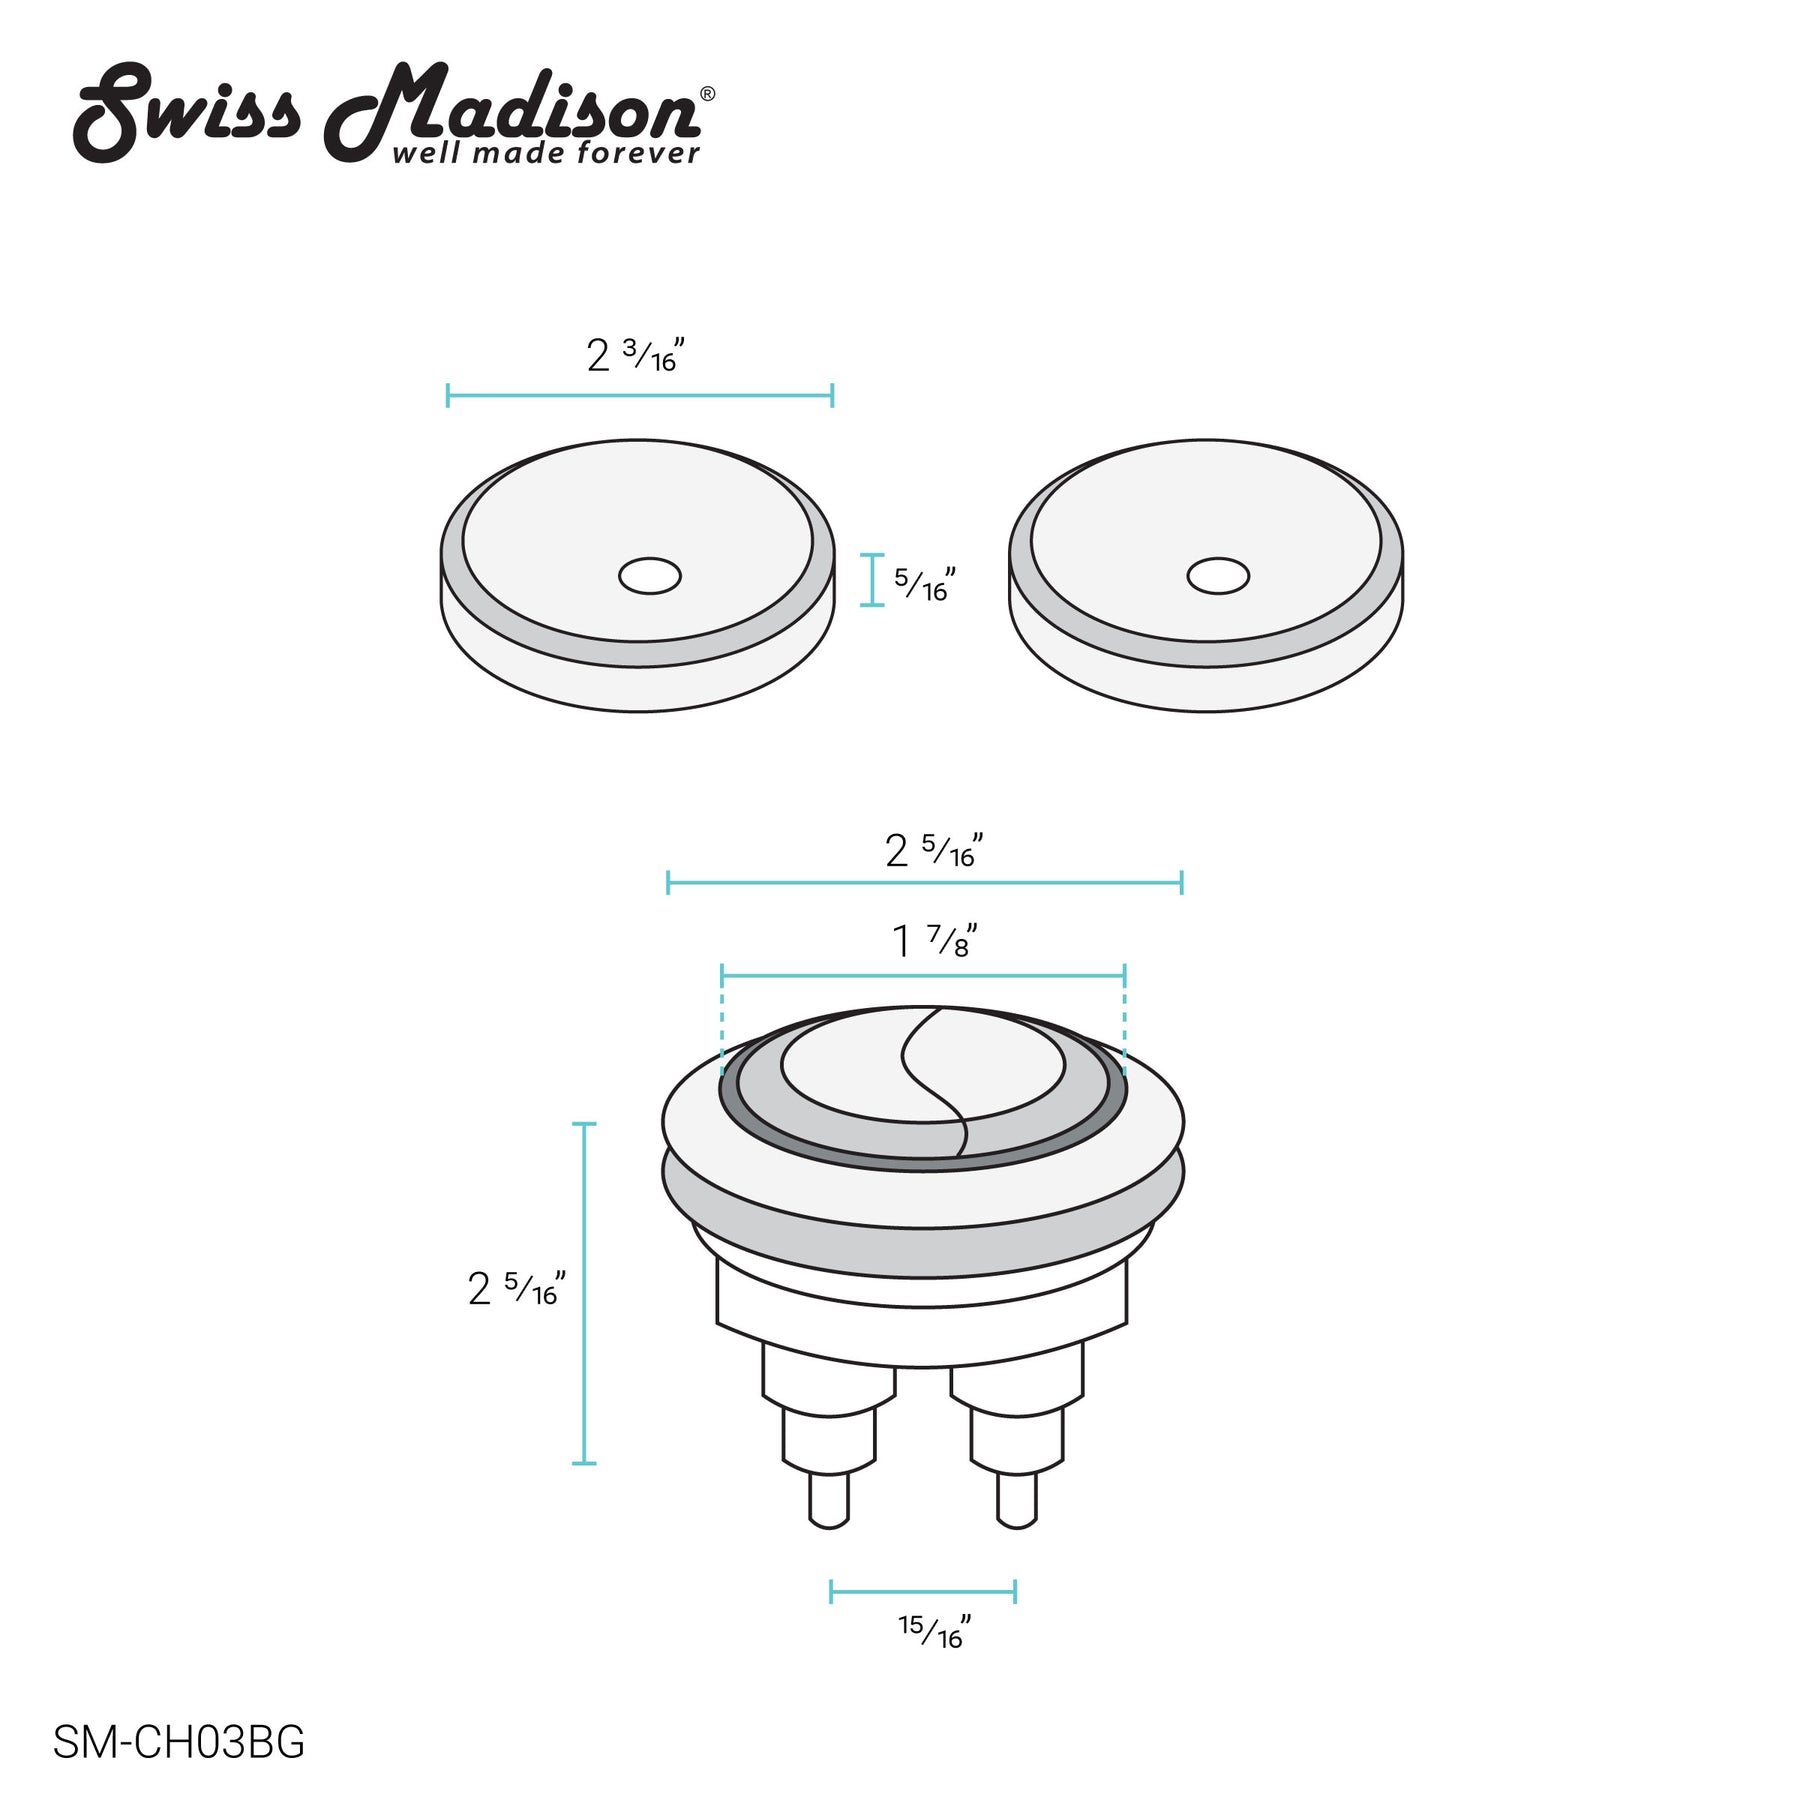 Swiss Madison Toilet Hardware (SM-1T256, SM-1T205) - SM-CH03B